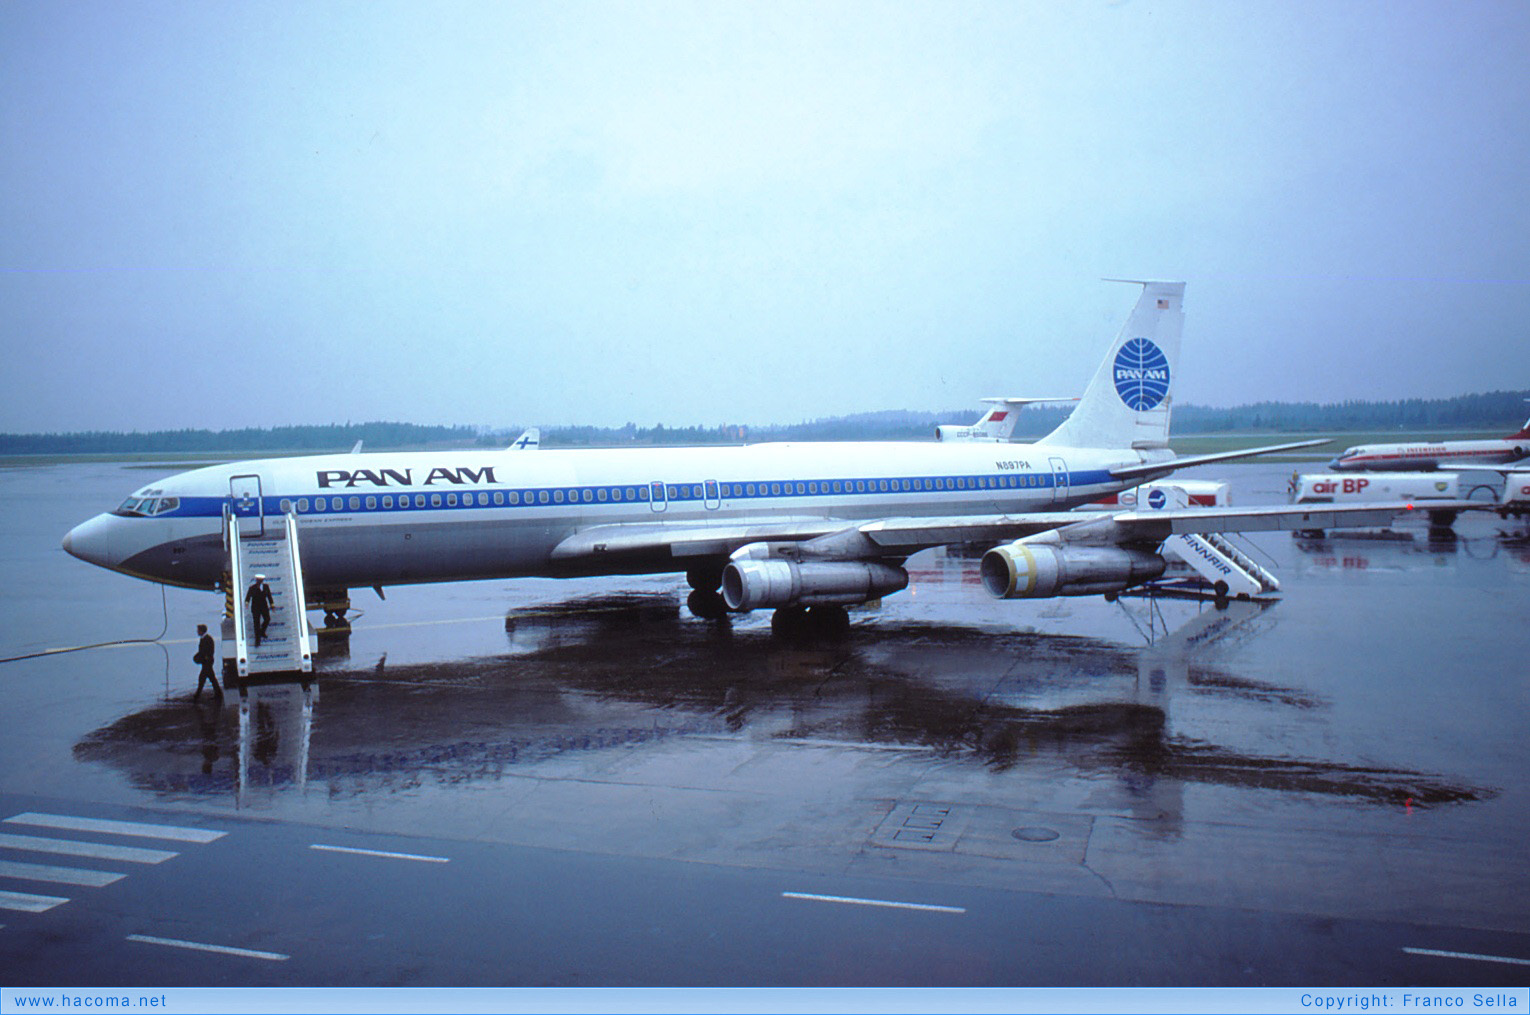 Photo of N897PA - Pan Am Clipper Ocean Express - Helsinki Airport - Aug 27, 1977